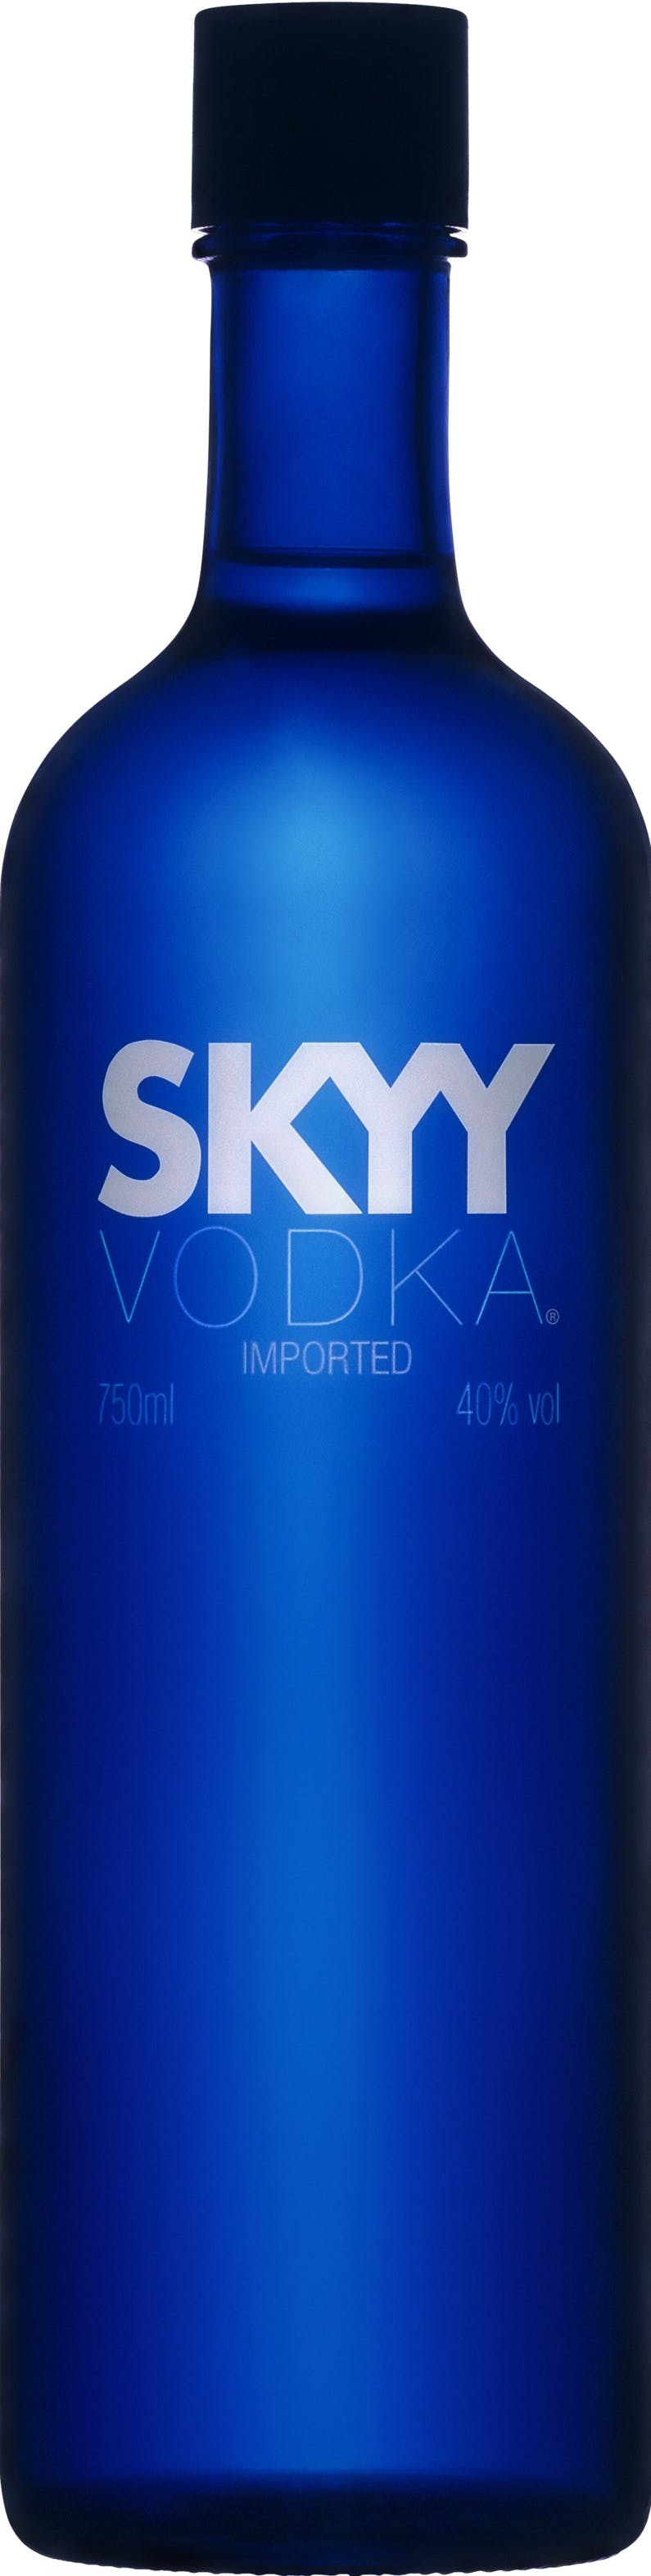 Skyy Vodka 750ml Vine Republic 